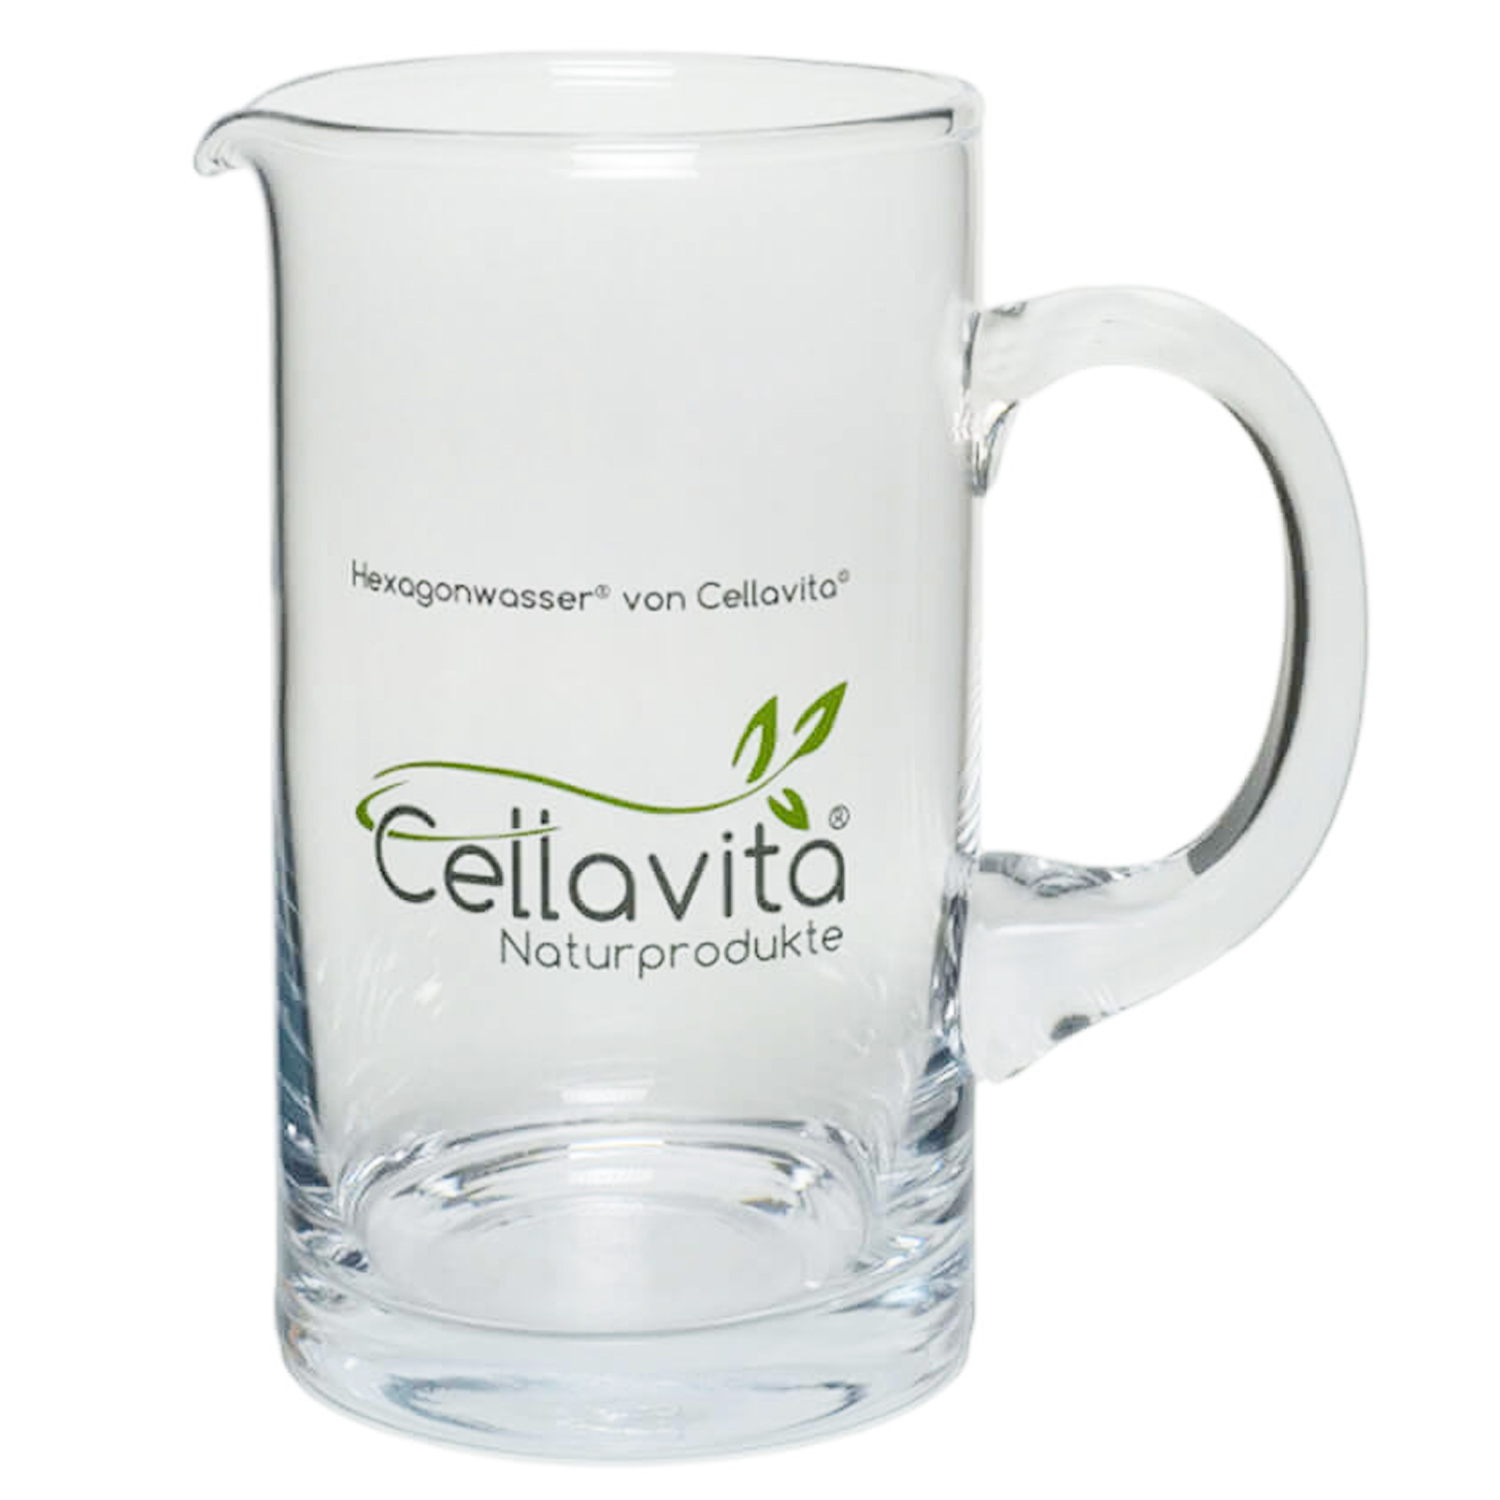 Glaskrug 1L von Cellavita